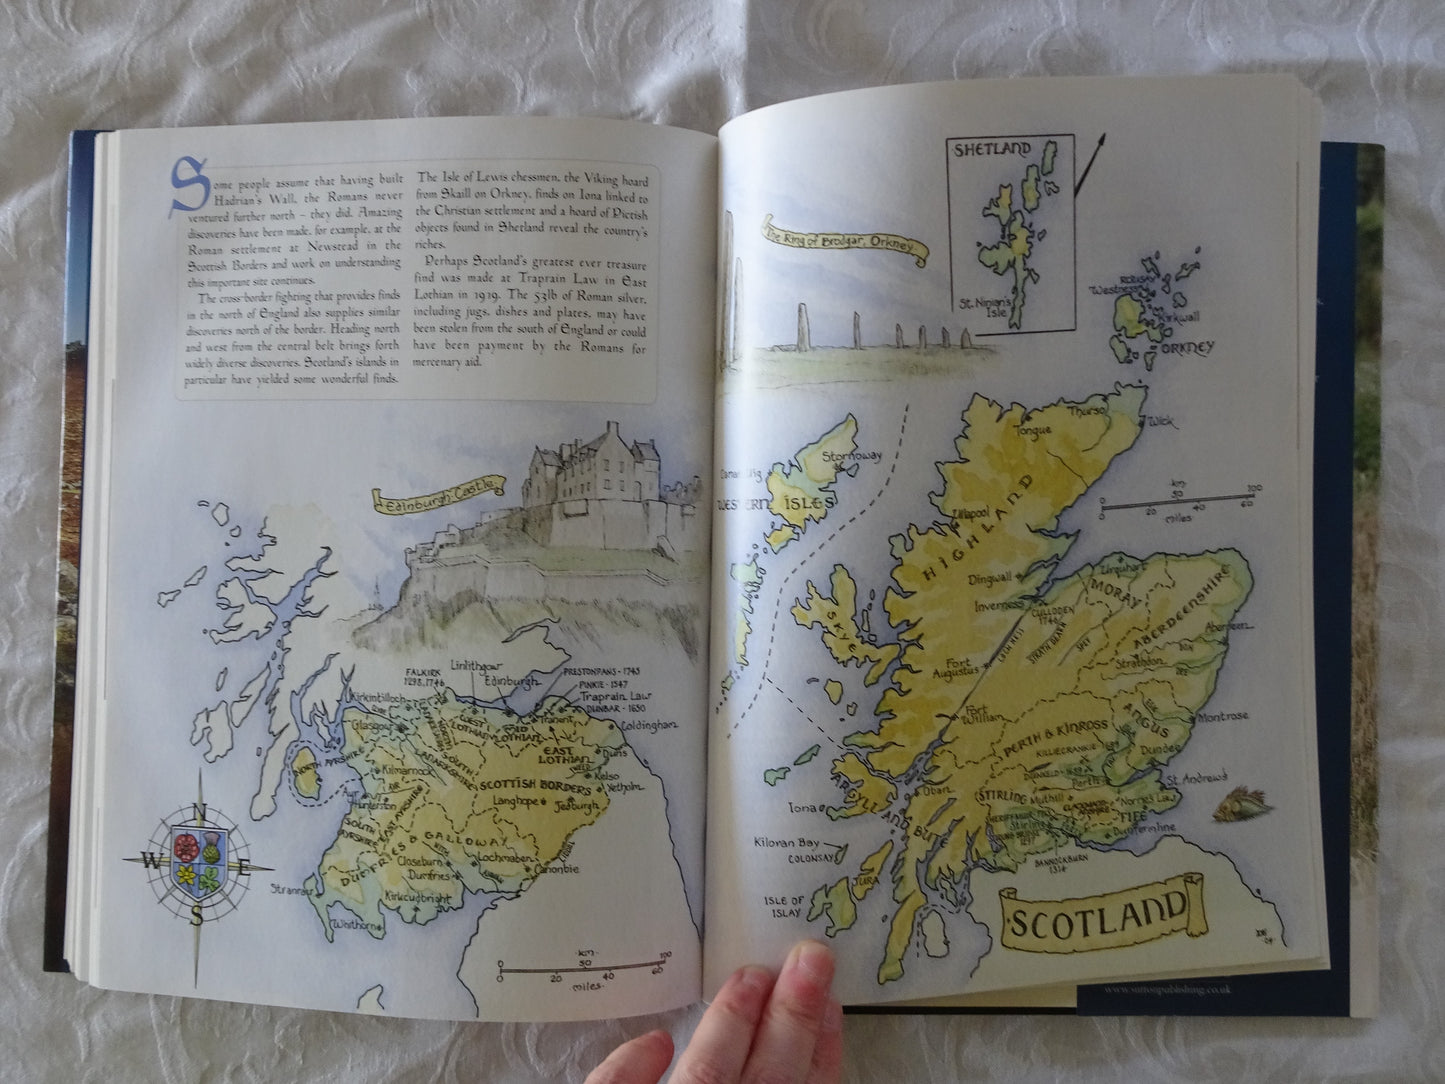 Bill Wyman's Treasure Islands by Bill Wyman and Richard Havers